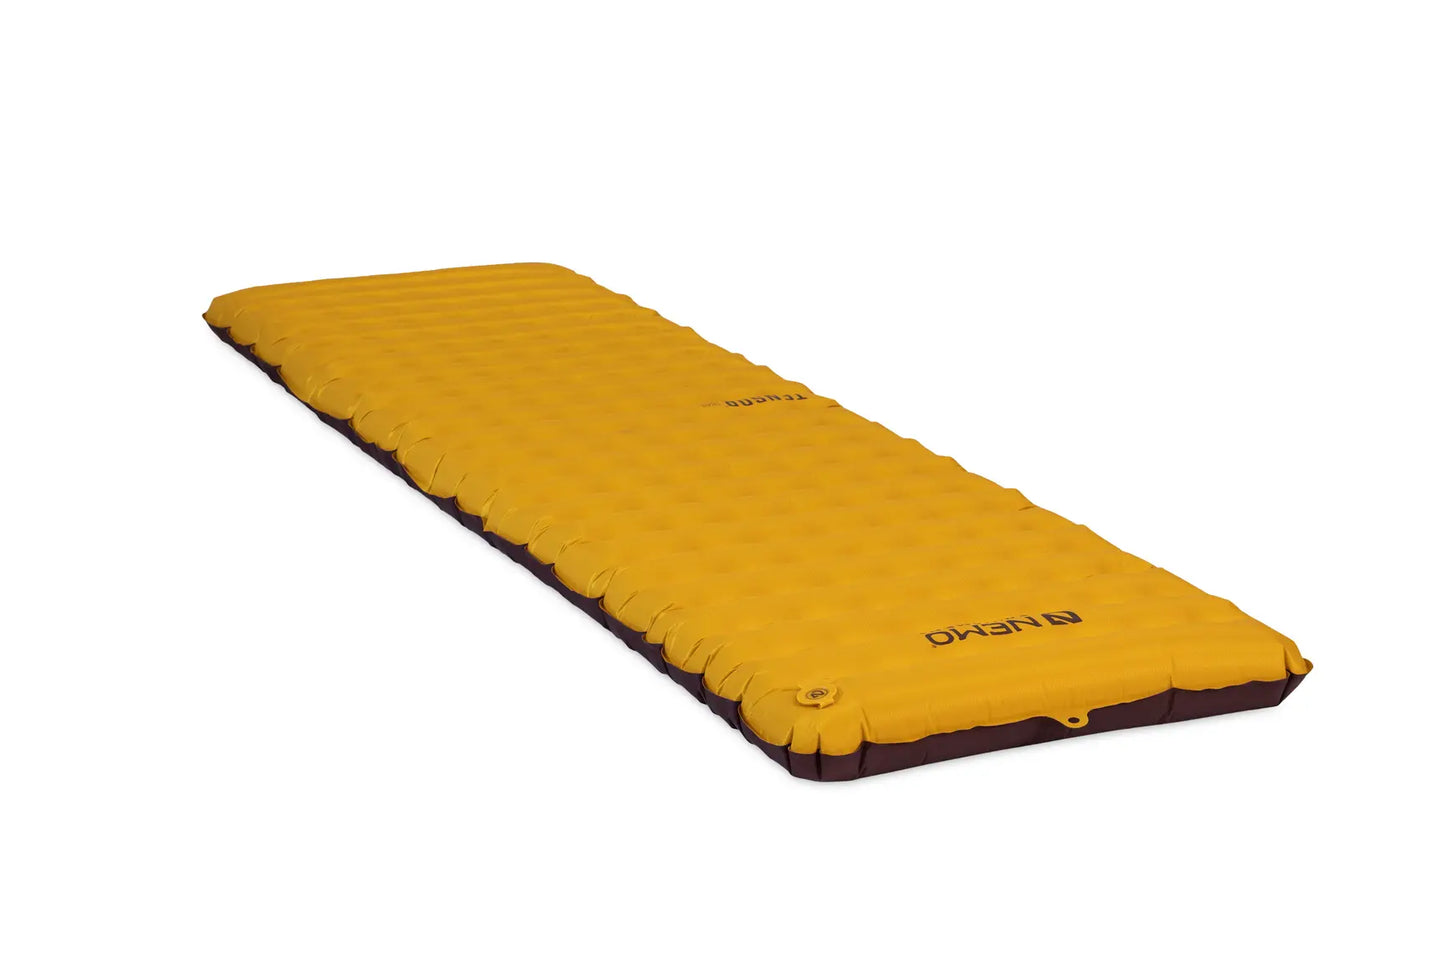 Nemo - Tensor Trail Ultralight Insulated Sleeping Pad - Regular